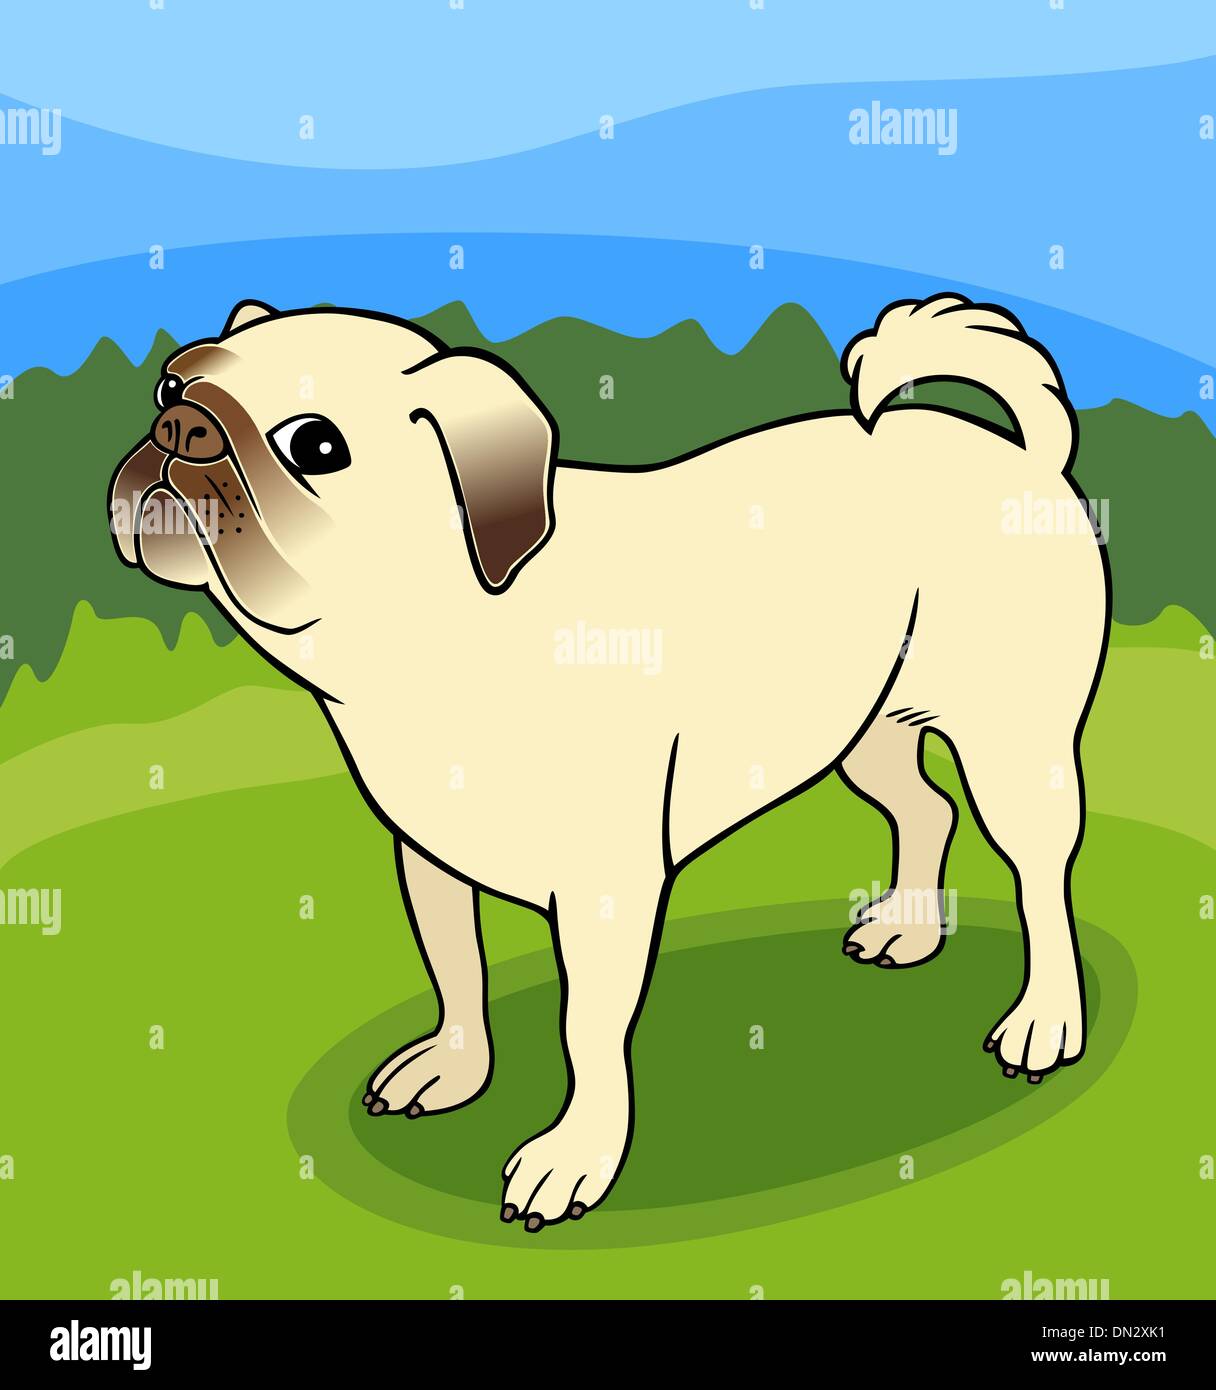 pug dog cartoon illustration Stock Vector